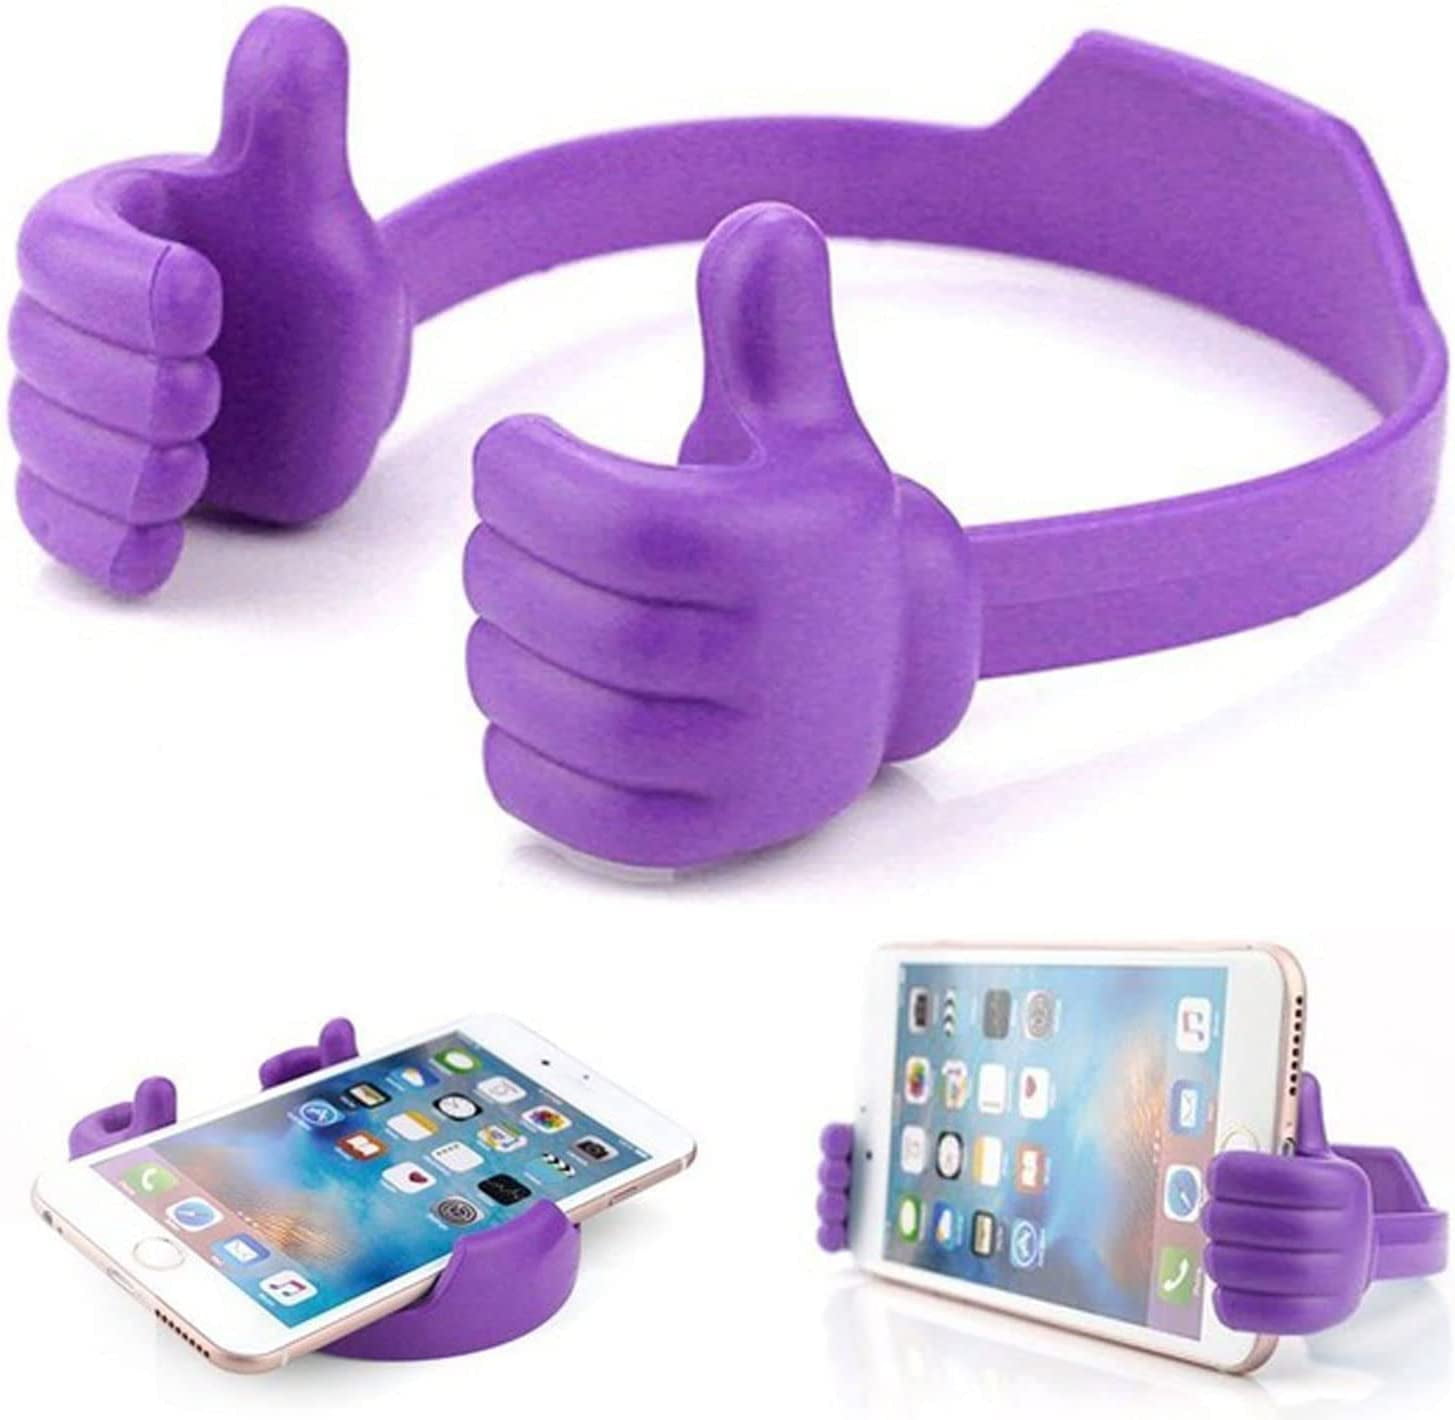 Thumbs-up Cell Phone Holder Adjustable plastic Phone Stand Multi Colors  Porta-bu